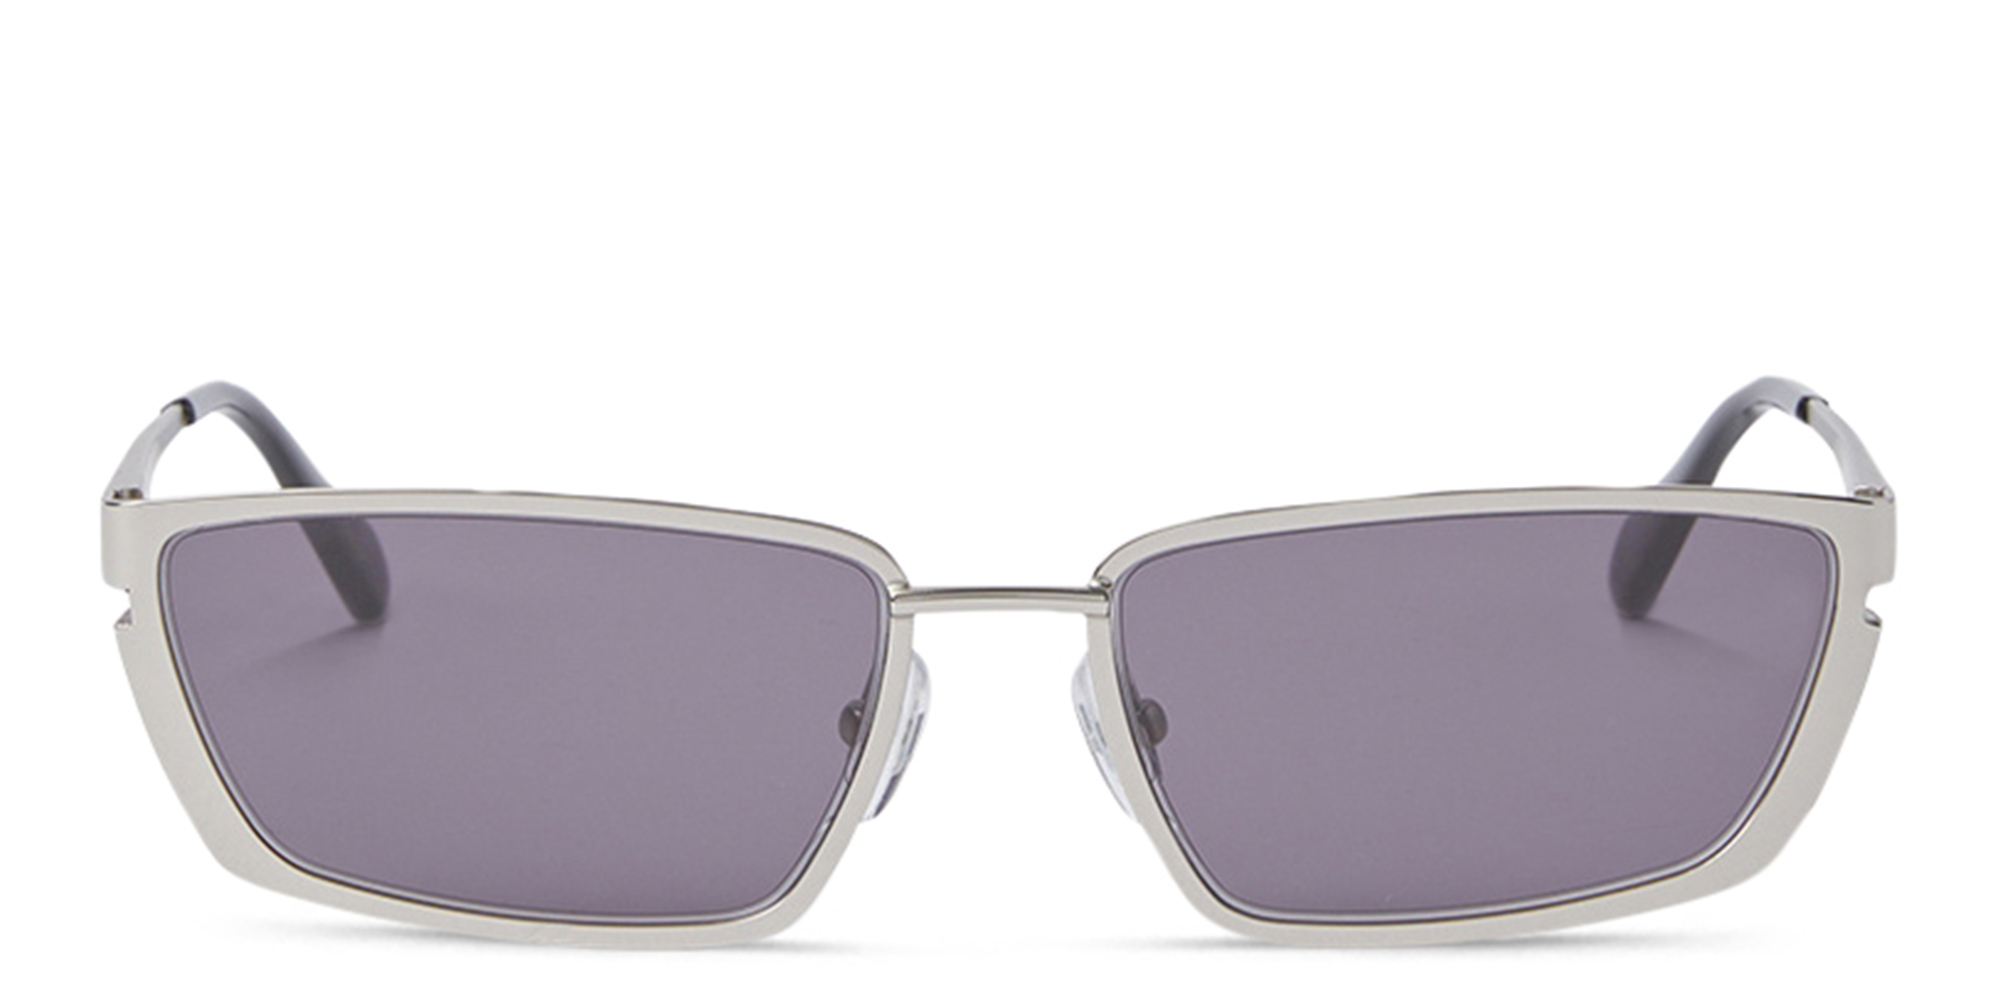 

Richfield Unisex Cat-Eye Sunglasses, Silver